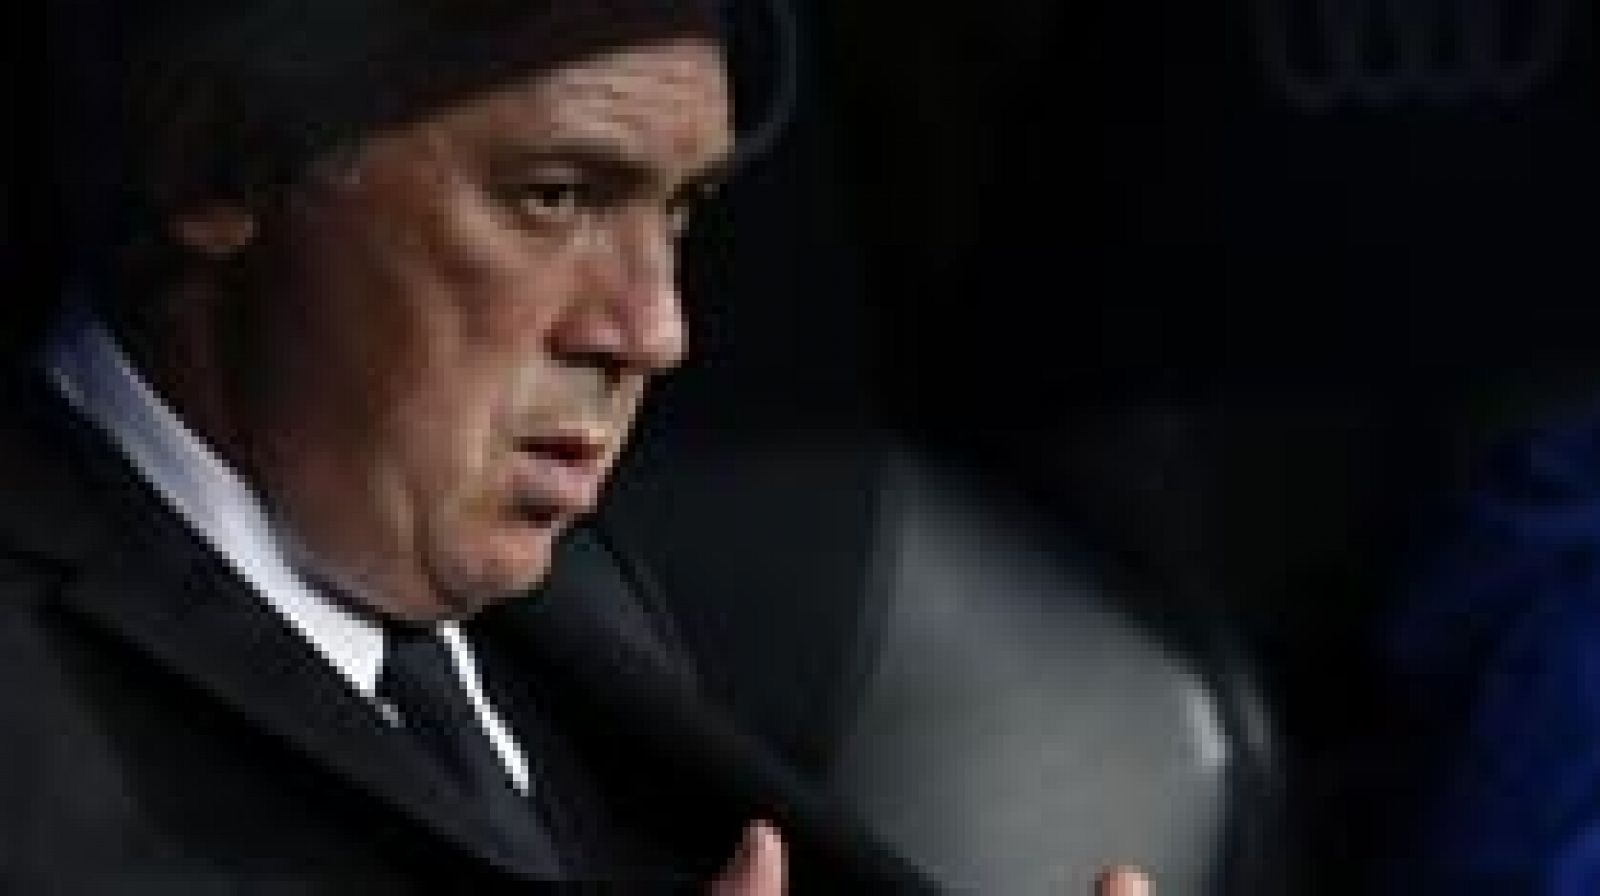 Telediario 1: Ancelotti: "La final tiene mucha importancia en el aspecto mental" | RTVE Play